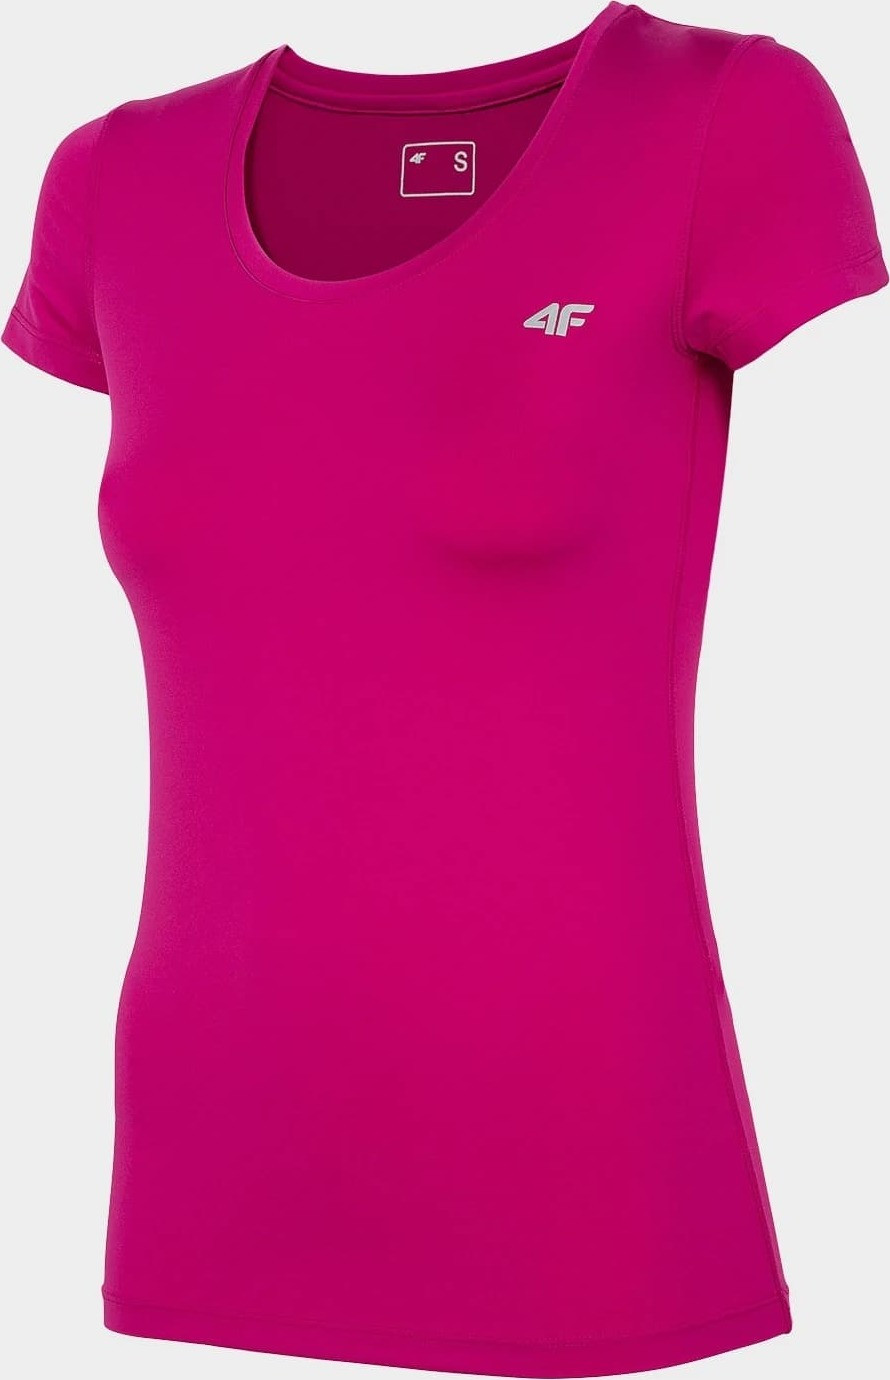 Dámské tričko 4F TSDF002 Růžové pink solid M